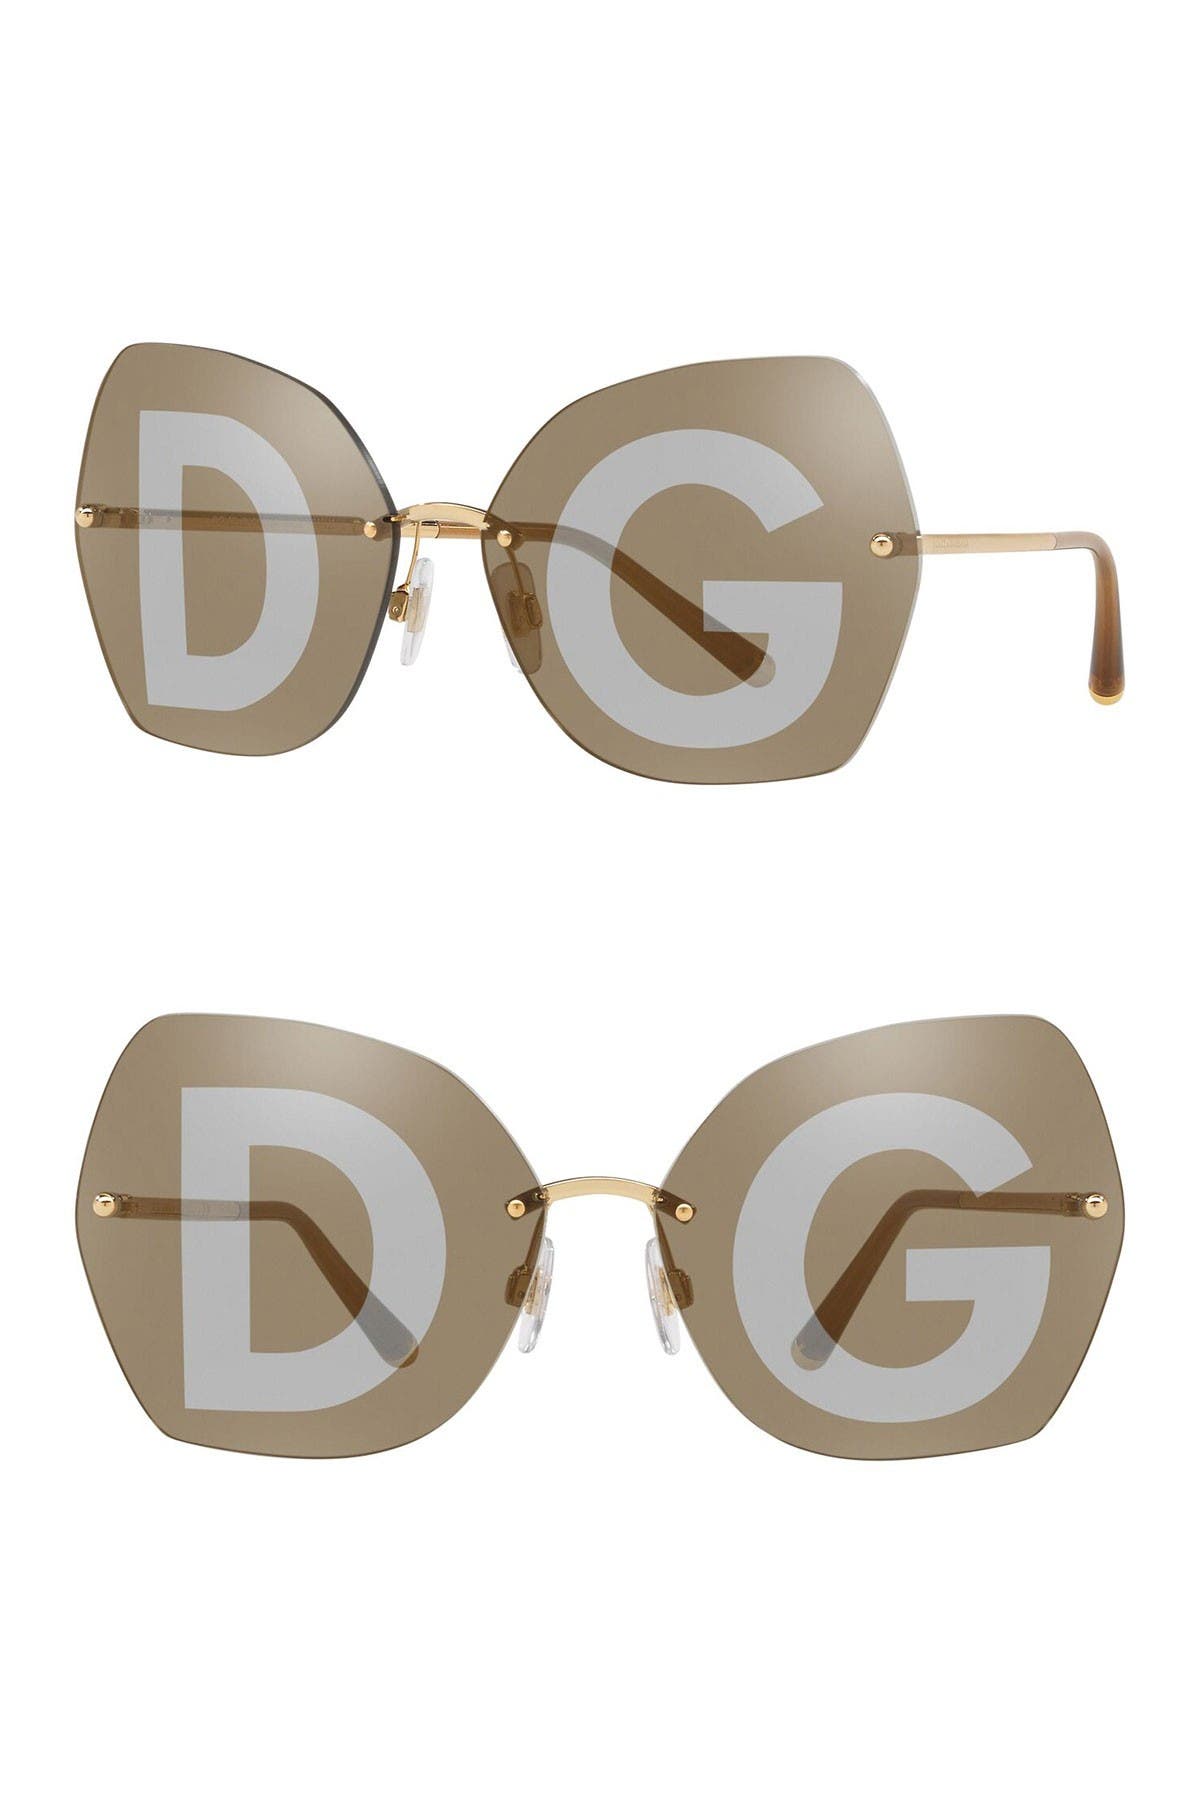 d&g sunglasses logo